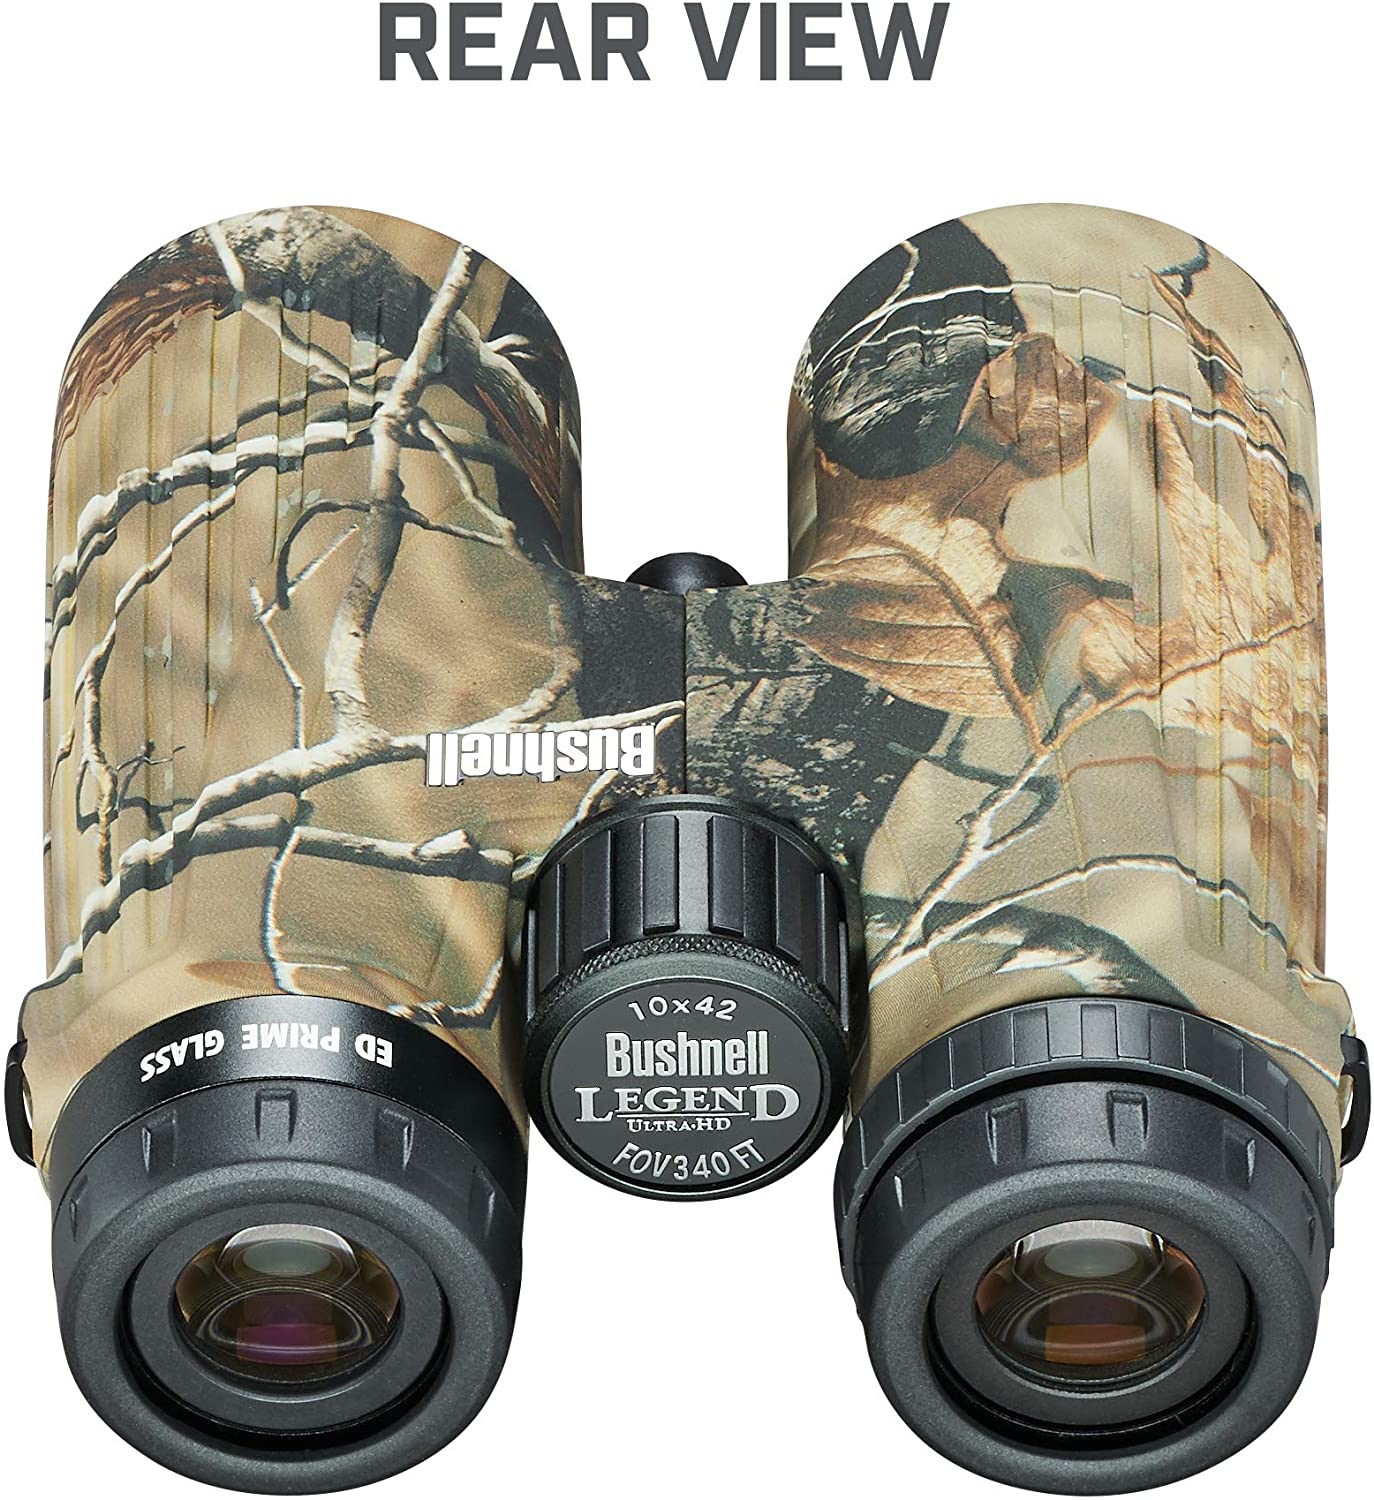 Bushnell compact hunting binoculars